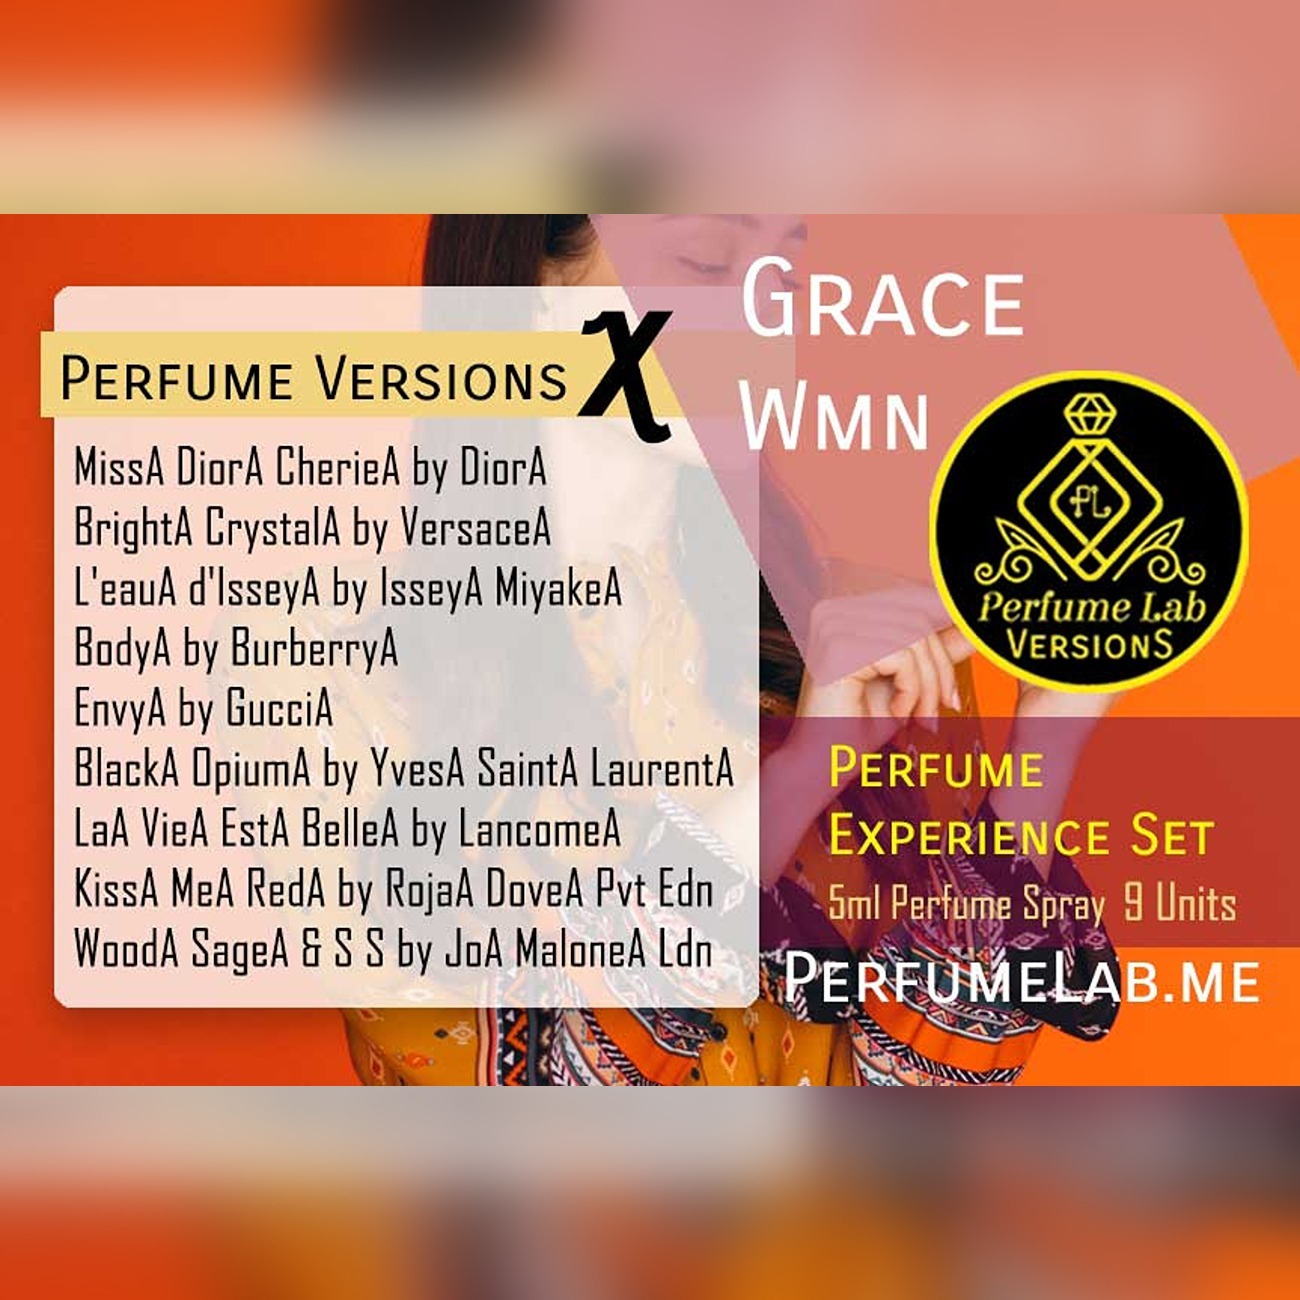 Grace Women - X Versions 5ml EDP Spray Set